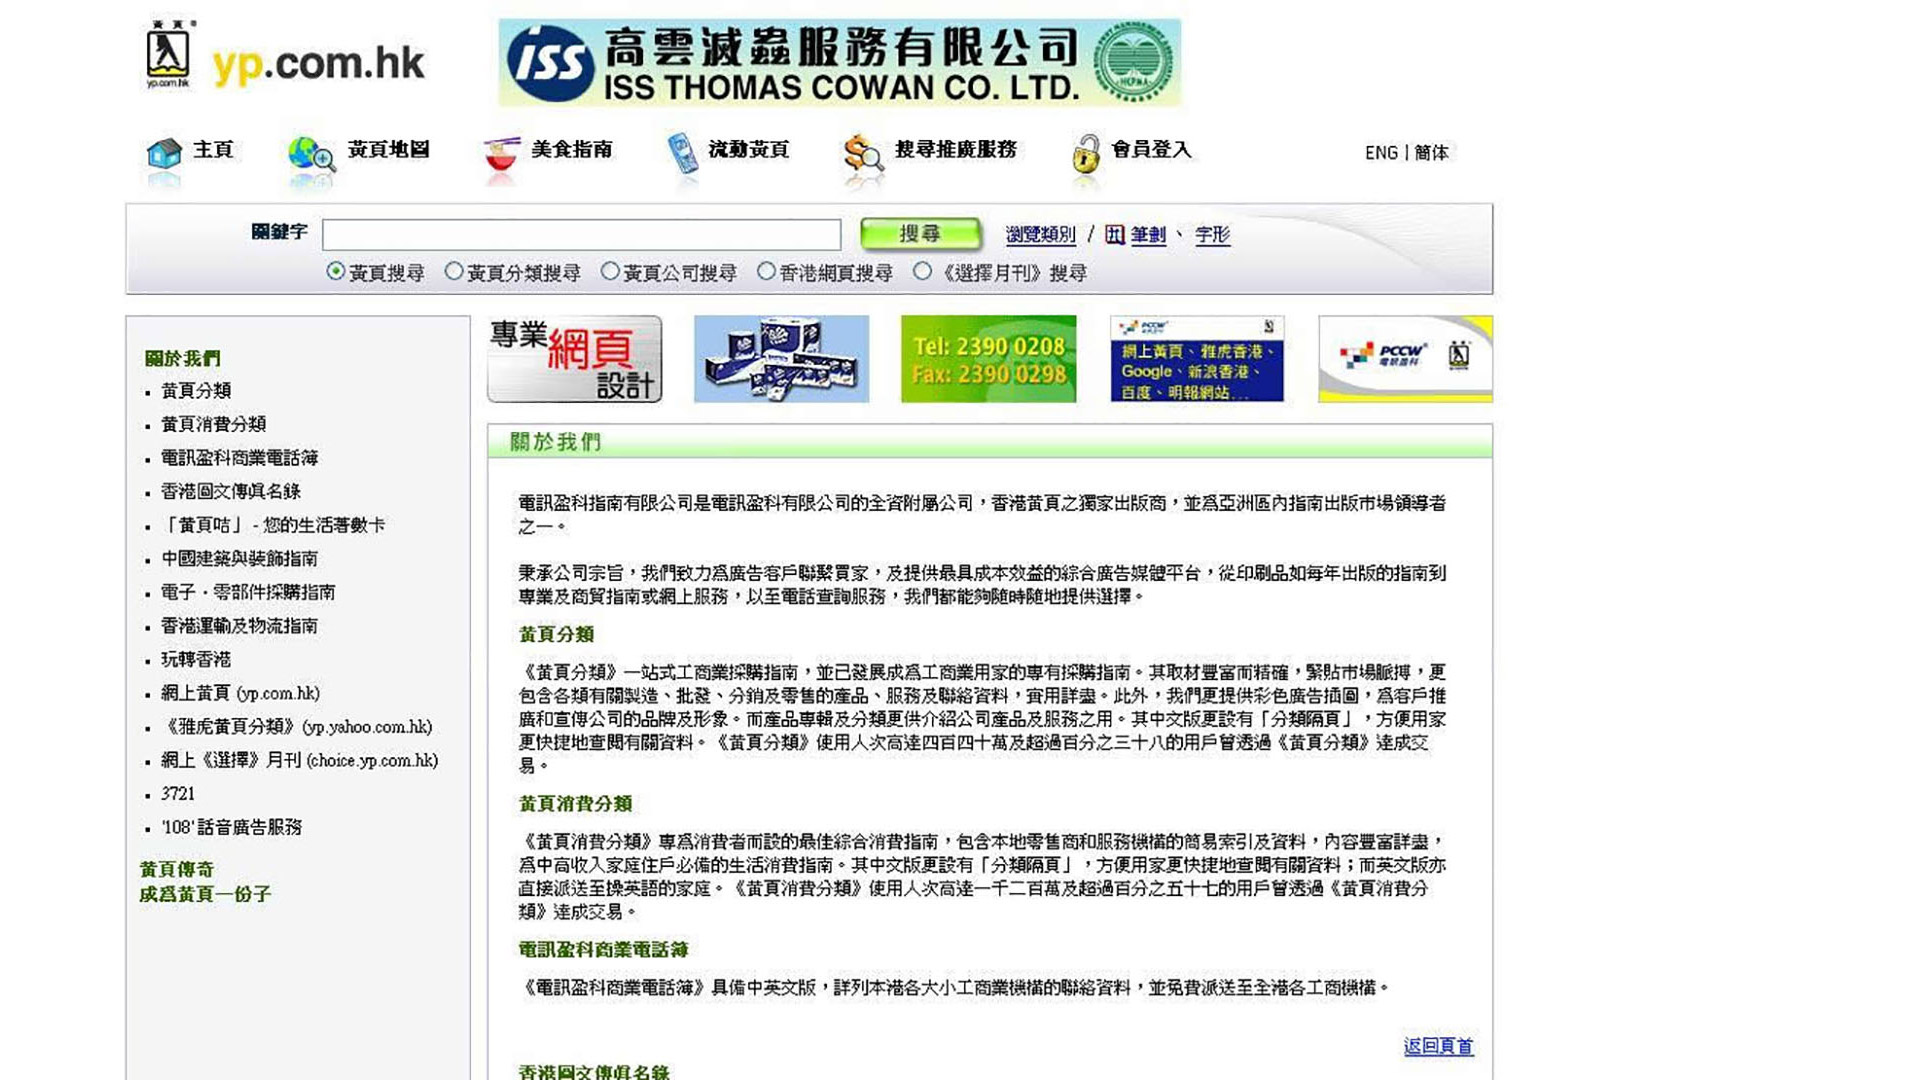 Internet Yellow Page - YP.com.hk